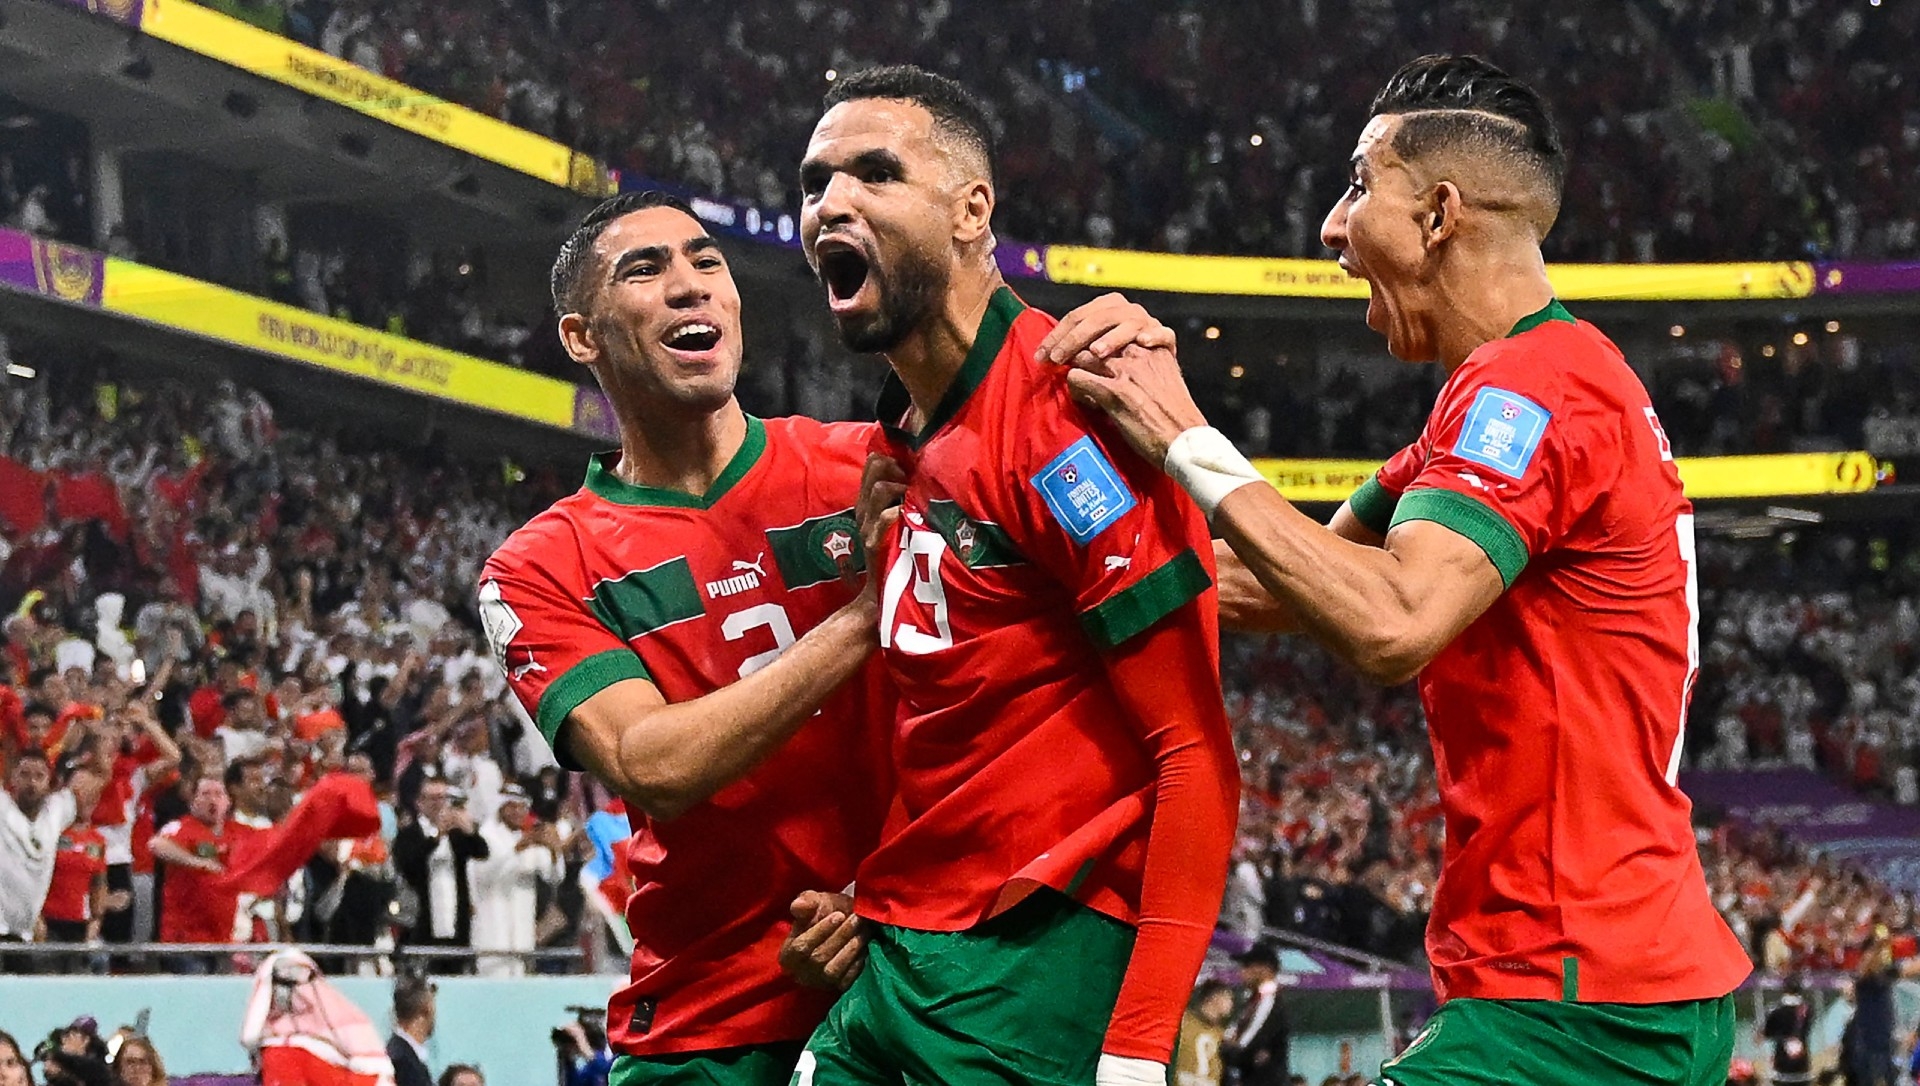  Mundo-2022: Marruecos en semifinales al vencer a Portugal por 1 gol a 0